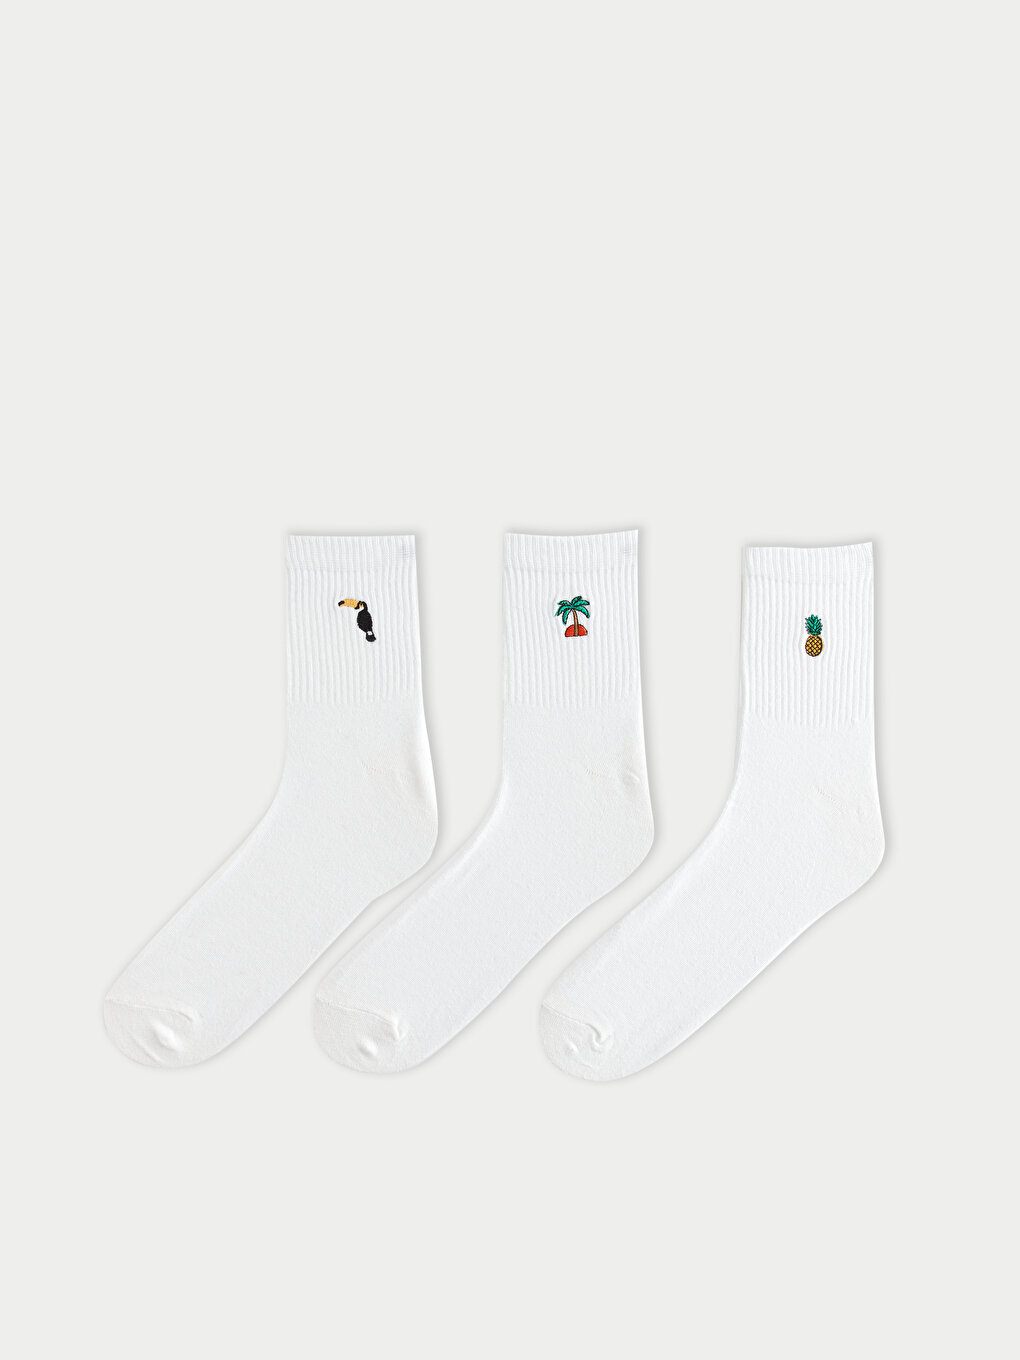 Мужские носки с рисунком, 3 предмета LCW ACCESSORIES, окрашенная пряжа смешанного цвета полосатые мужские носки 3 шт в упаковке lcw accessories